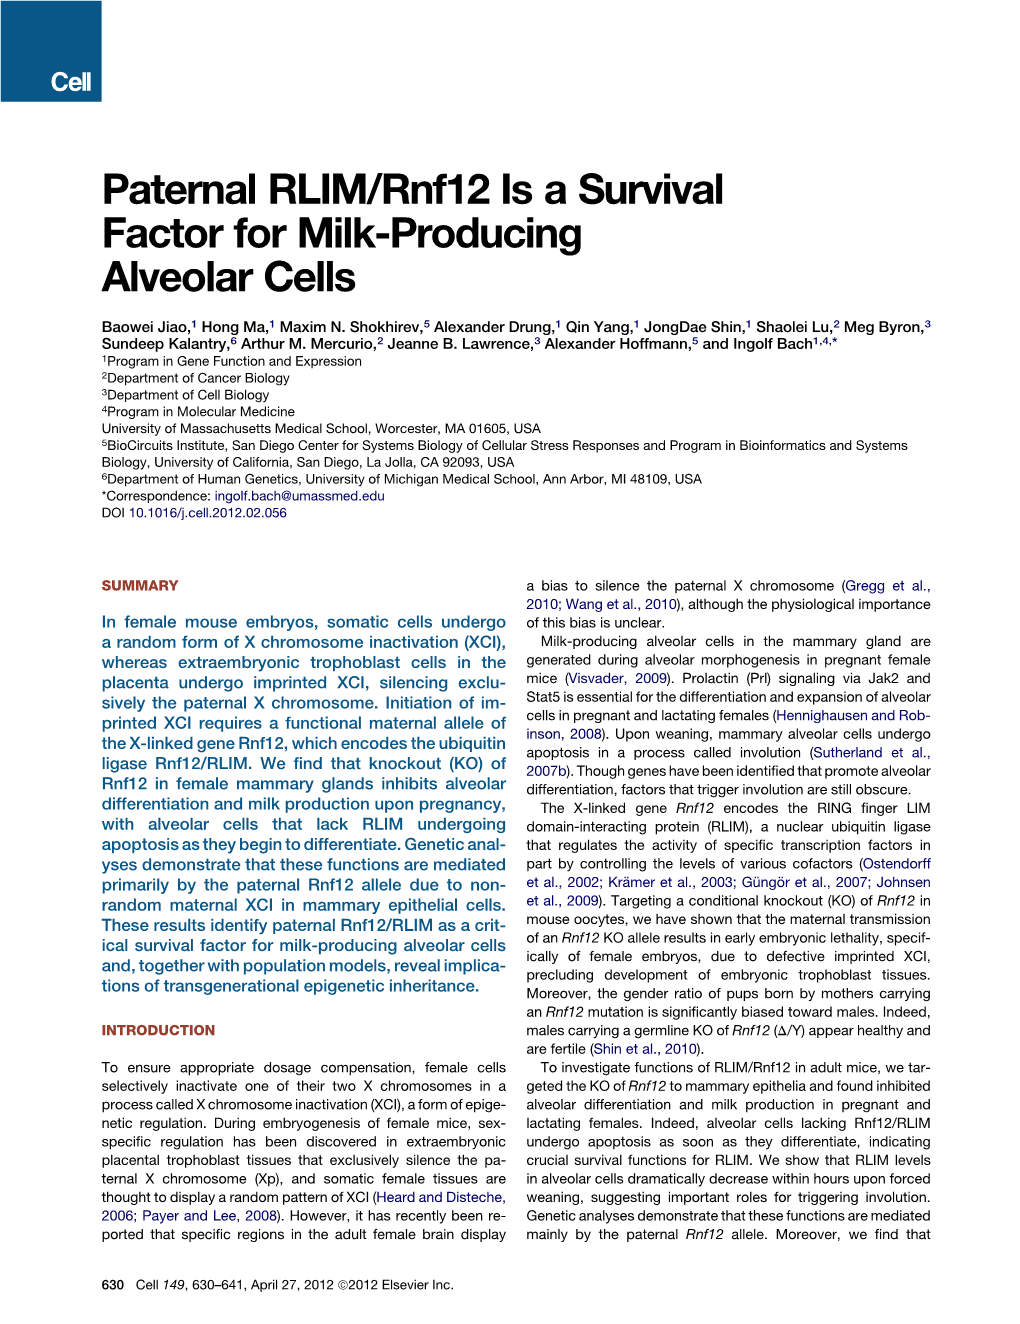 Paternal RLIM/Rnf12 Is a Survival Factor for Milk-Producing Alveolar Cells